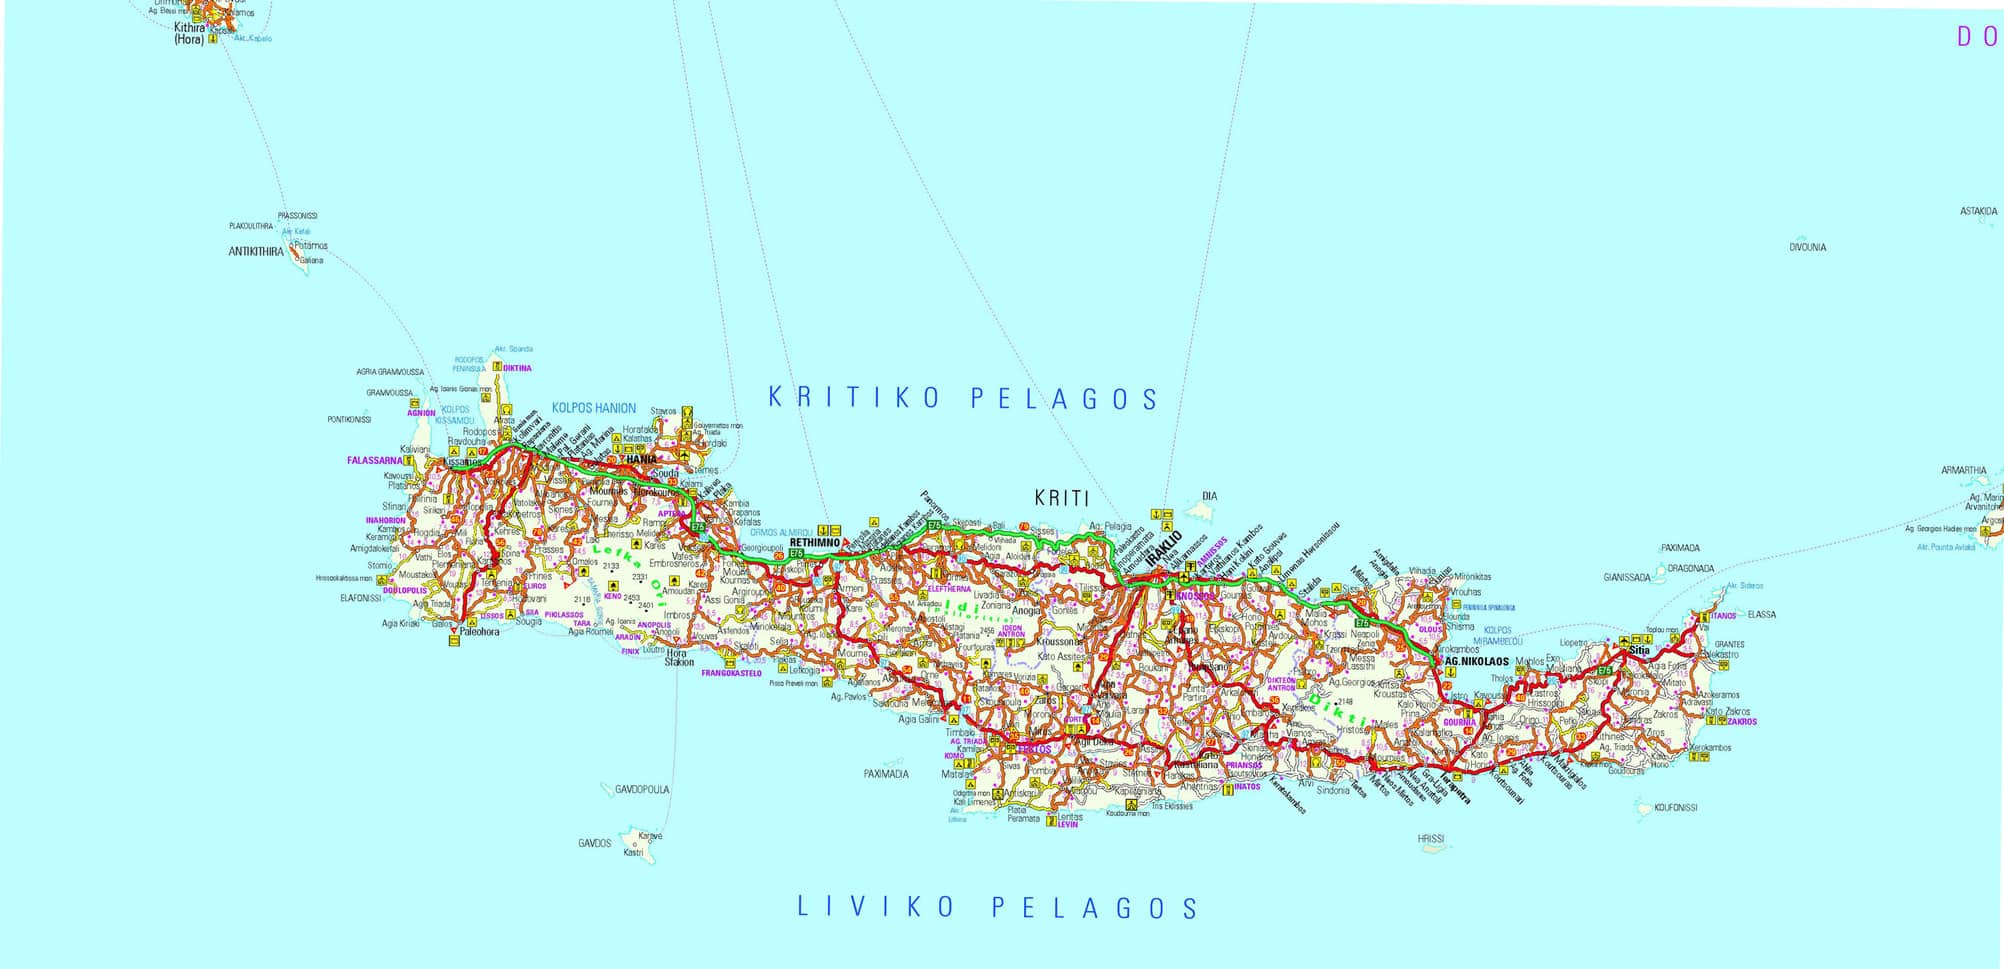 map of crete